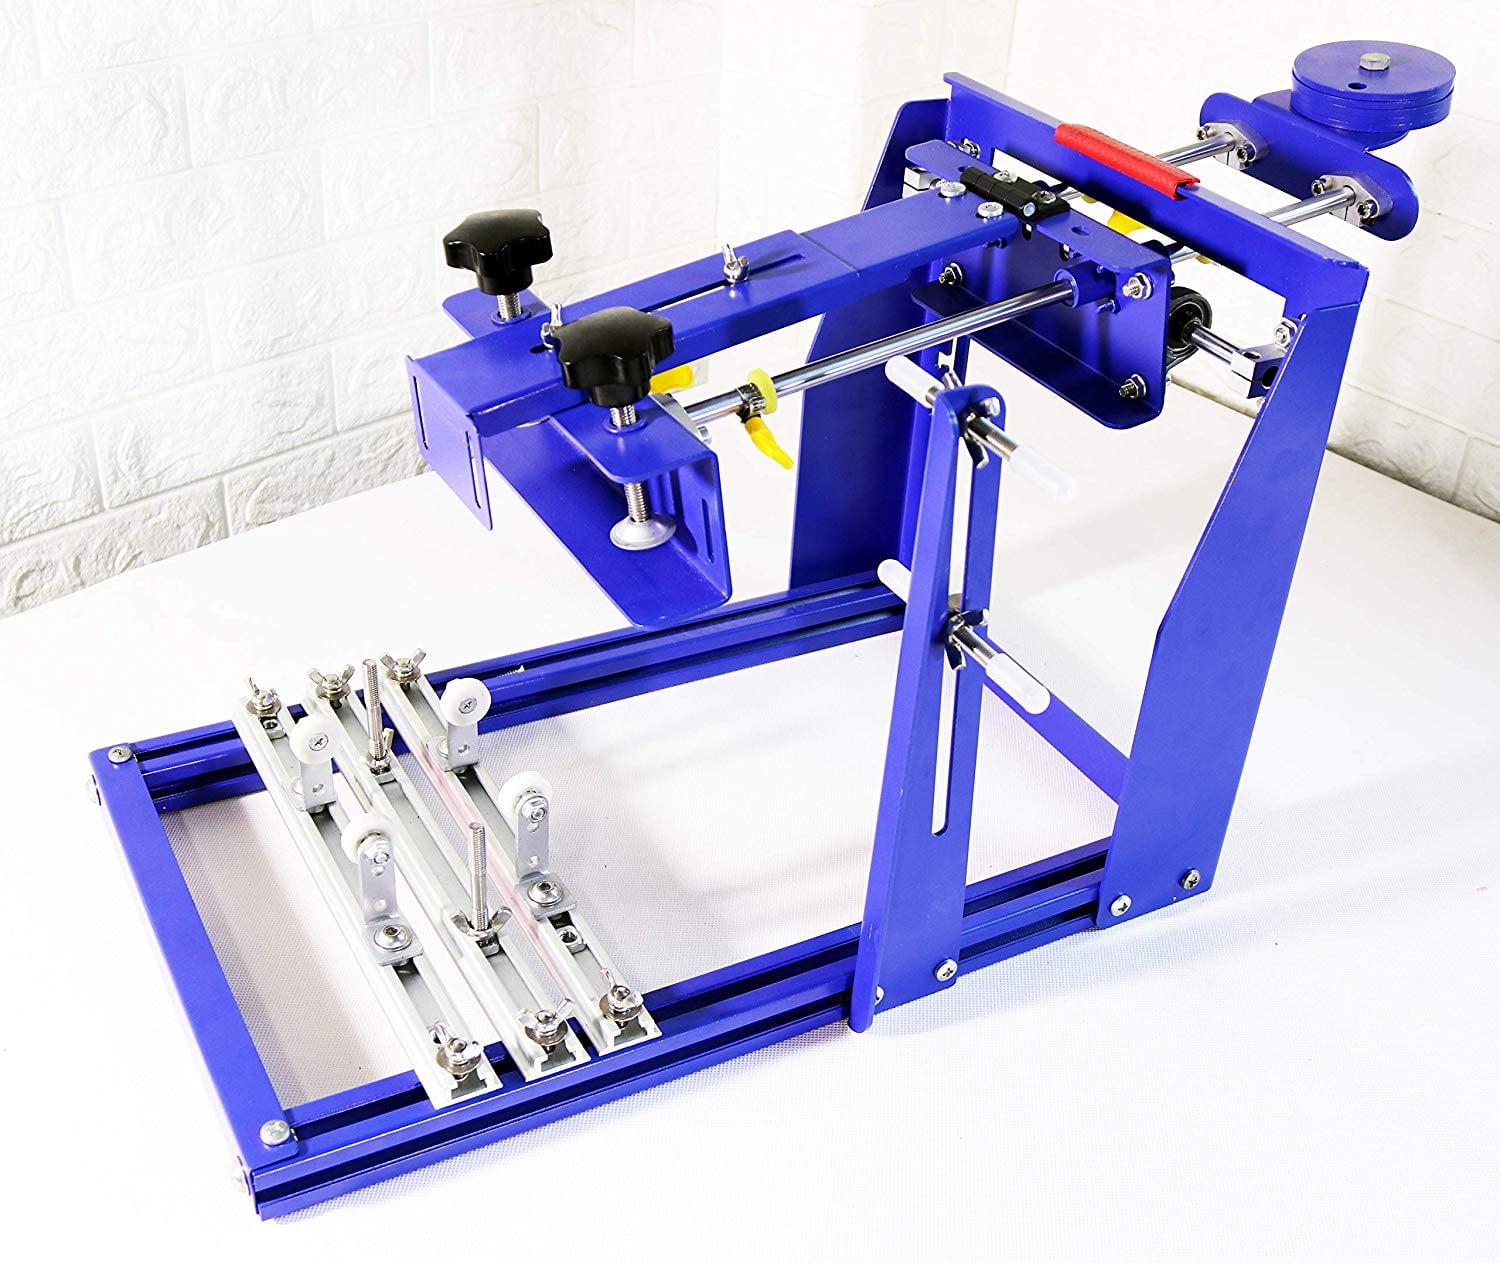 Intbuying 1 Color Screen Printing Press Kit Machine 1 Station Silk  Screening Pressing T-Shirt DIY Equipment 